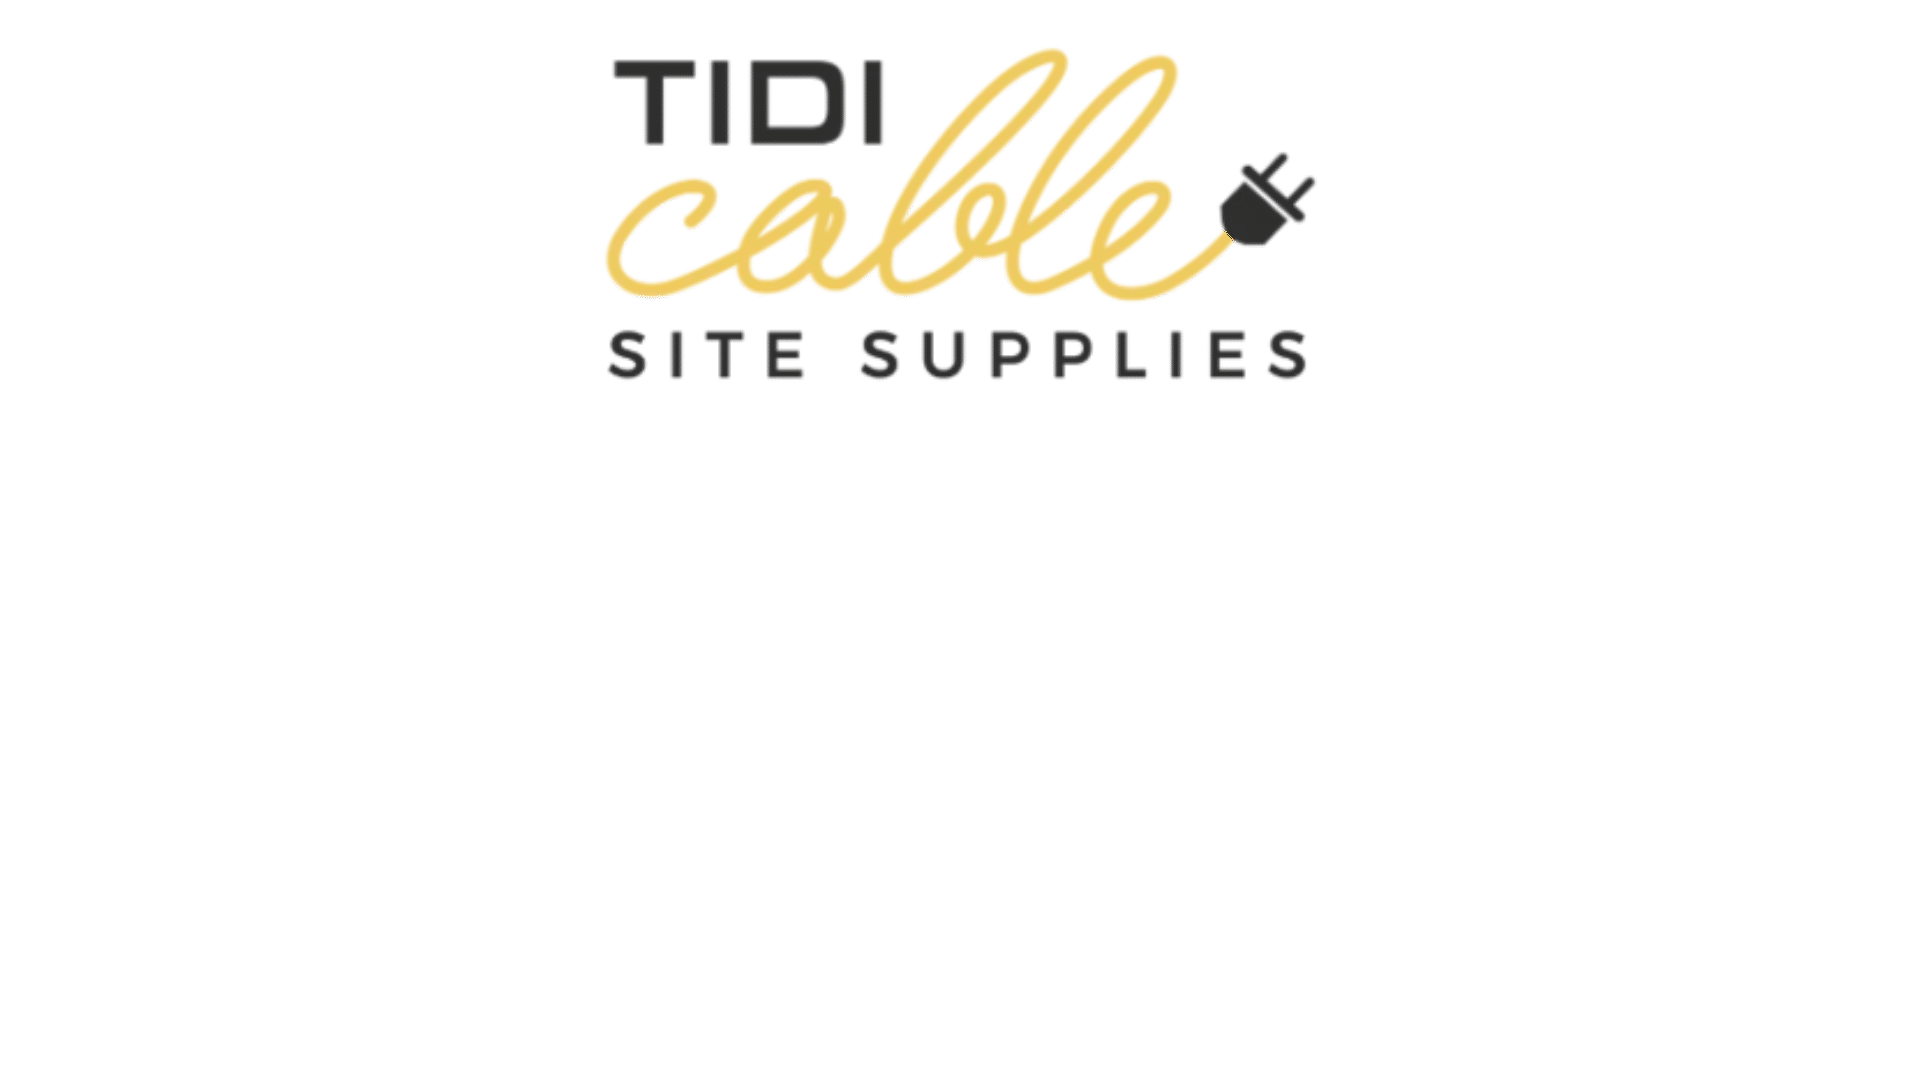 Tidi Case study - Hike image